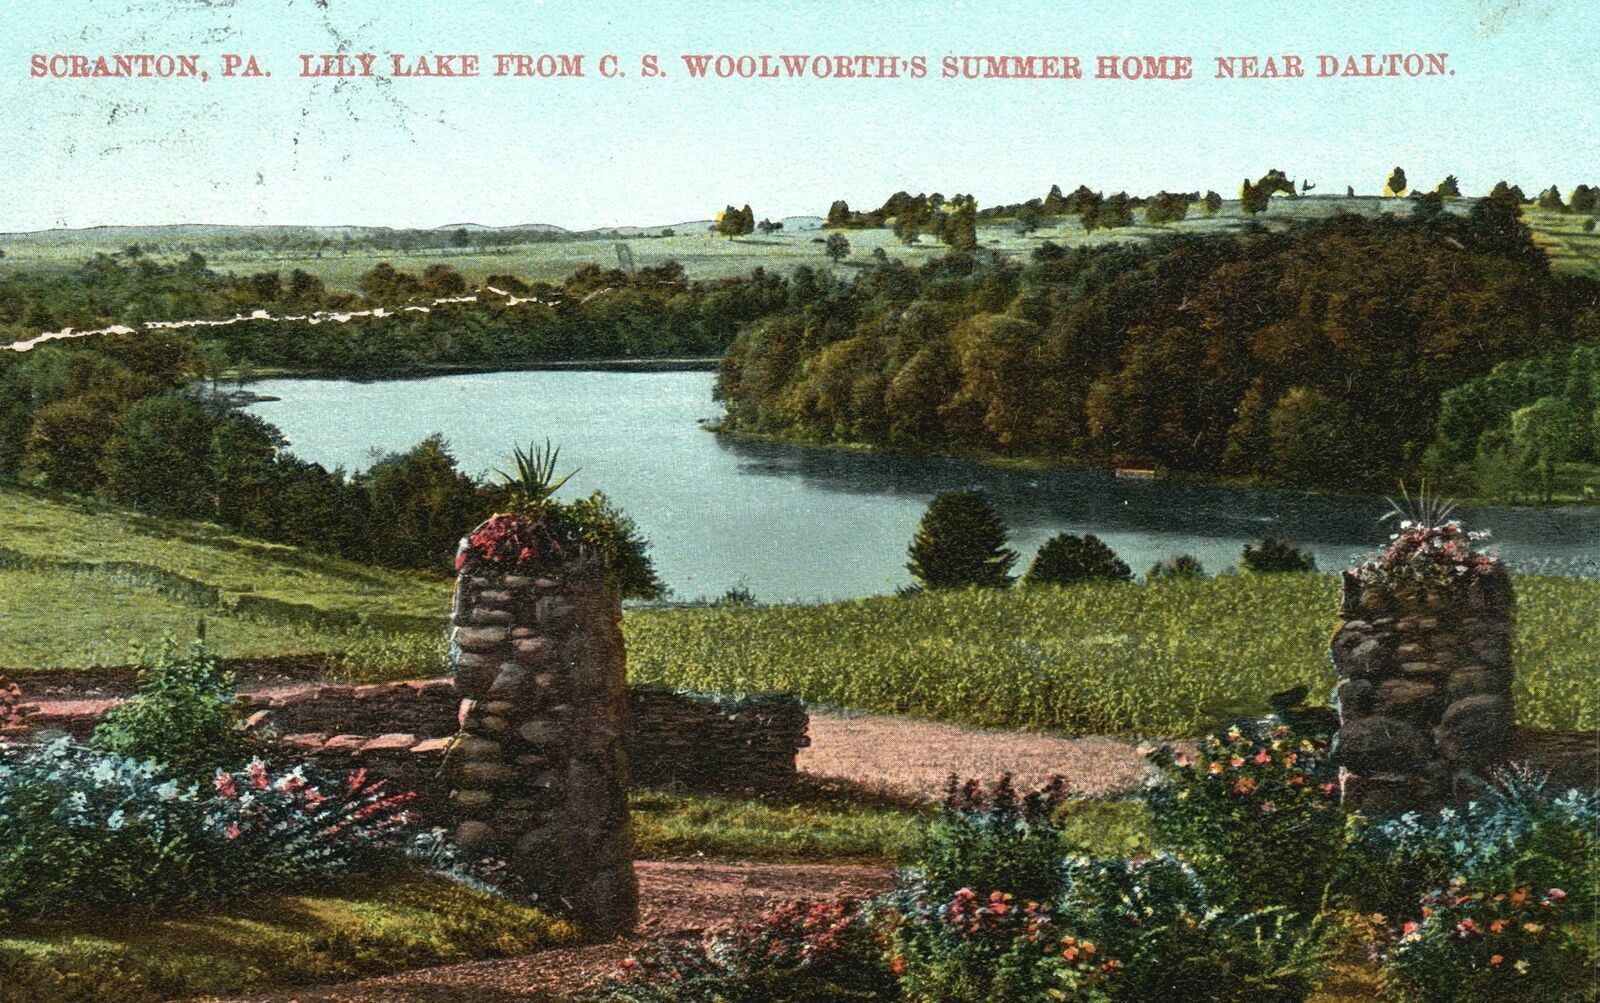 Vintage Postcard 1909 Lily Lake From C.S. Woolworth near Dalton Scranton Penn.